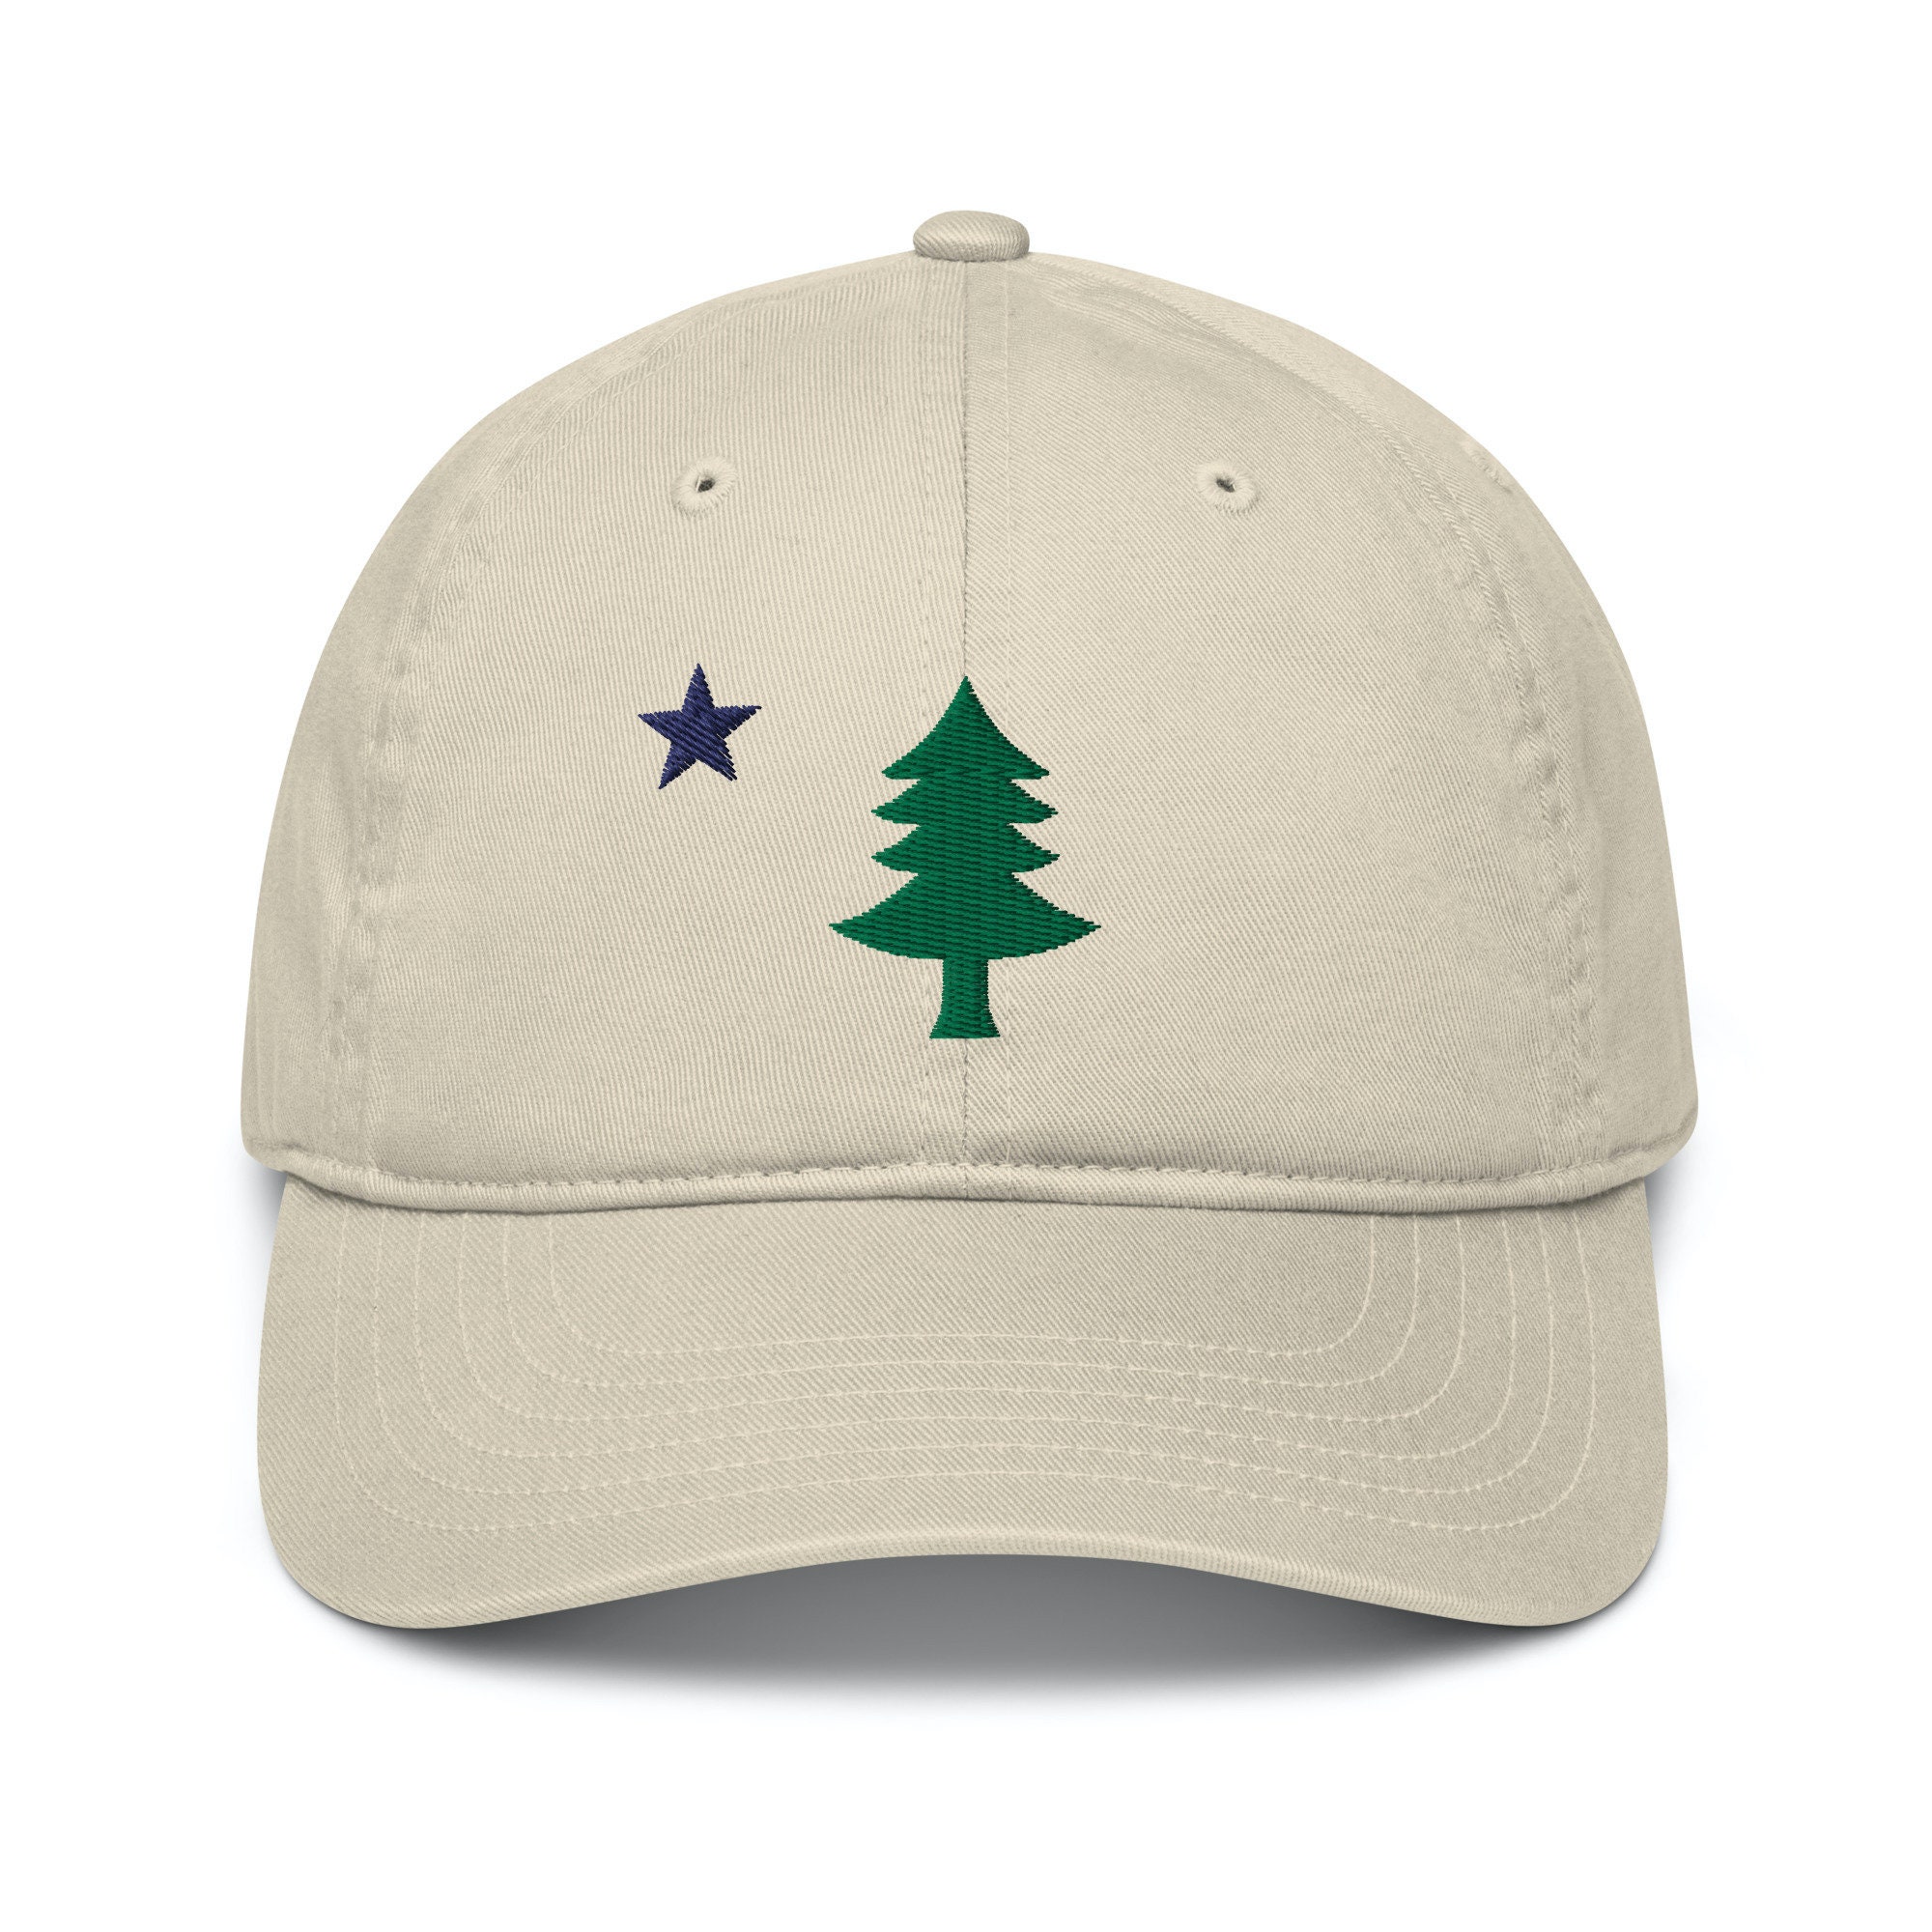 Real Tree Camo Trucker Hat Cap Flat or Curved Bill Mesh Snapback (RT Edge)